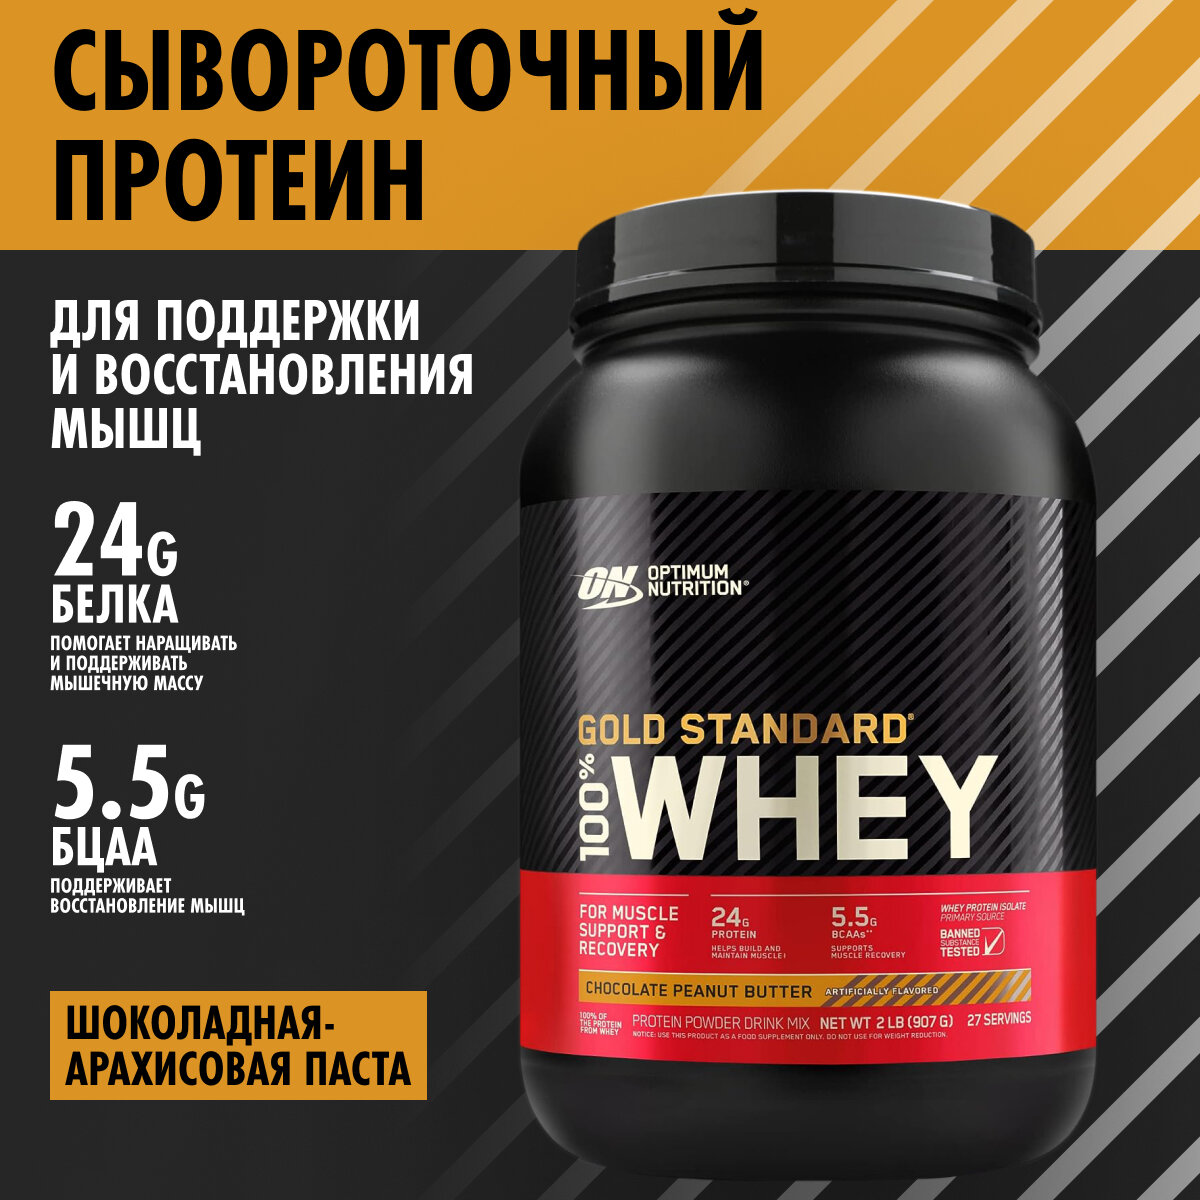 ON 100% Whey Gold standard 2lb (Chocolate Peanut Butter) - Протеин 907 грамм (Шоколадная ореховая паста)